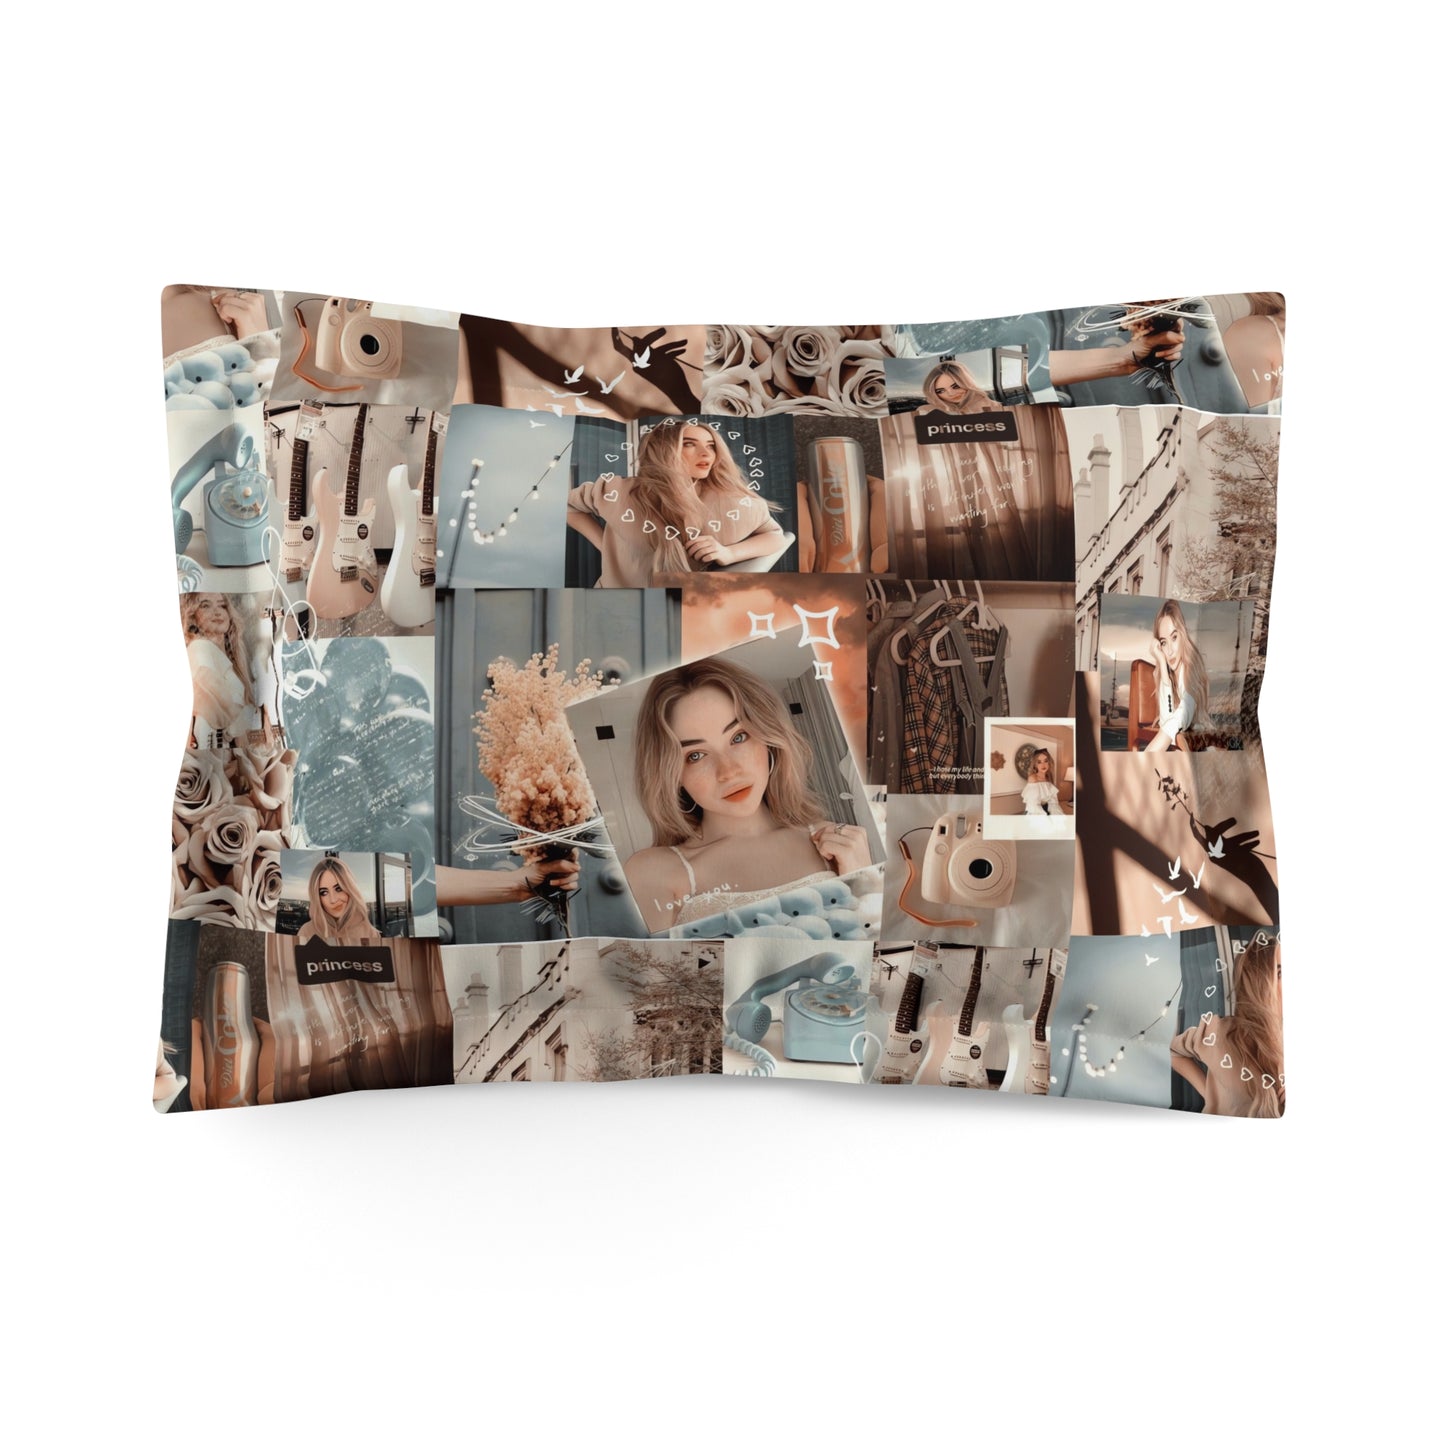 Sabrina Carpenter Peachy Princess Collage Microfiber Pillow Sham